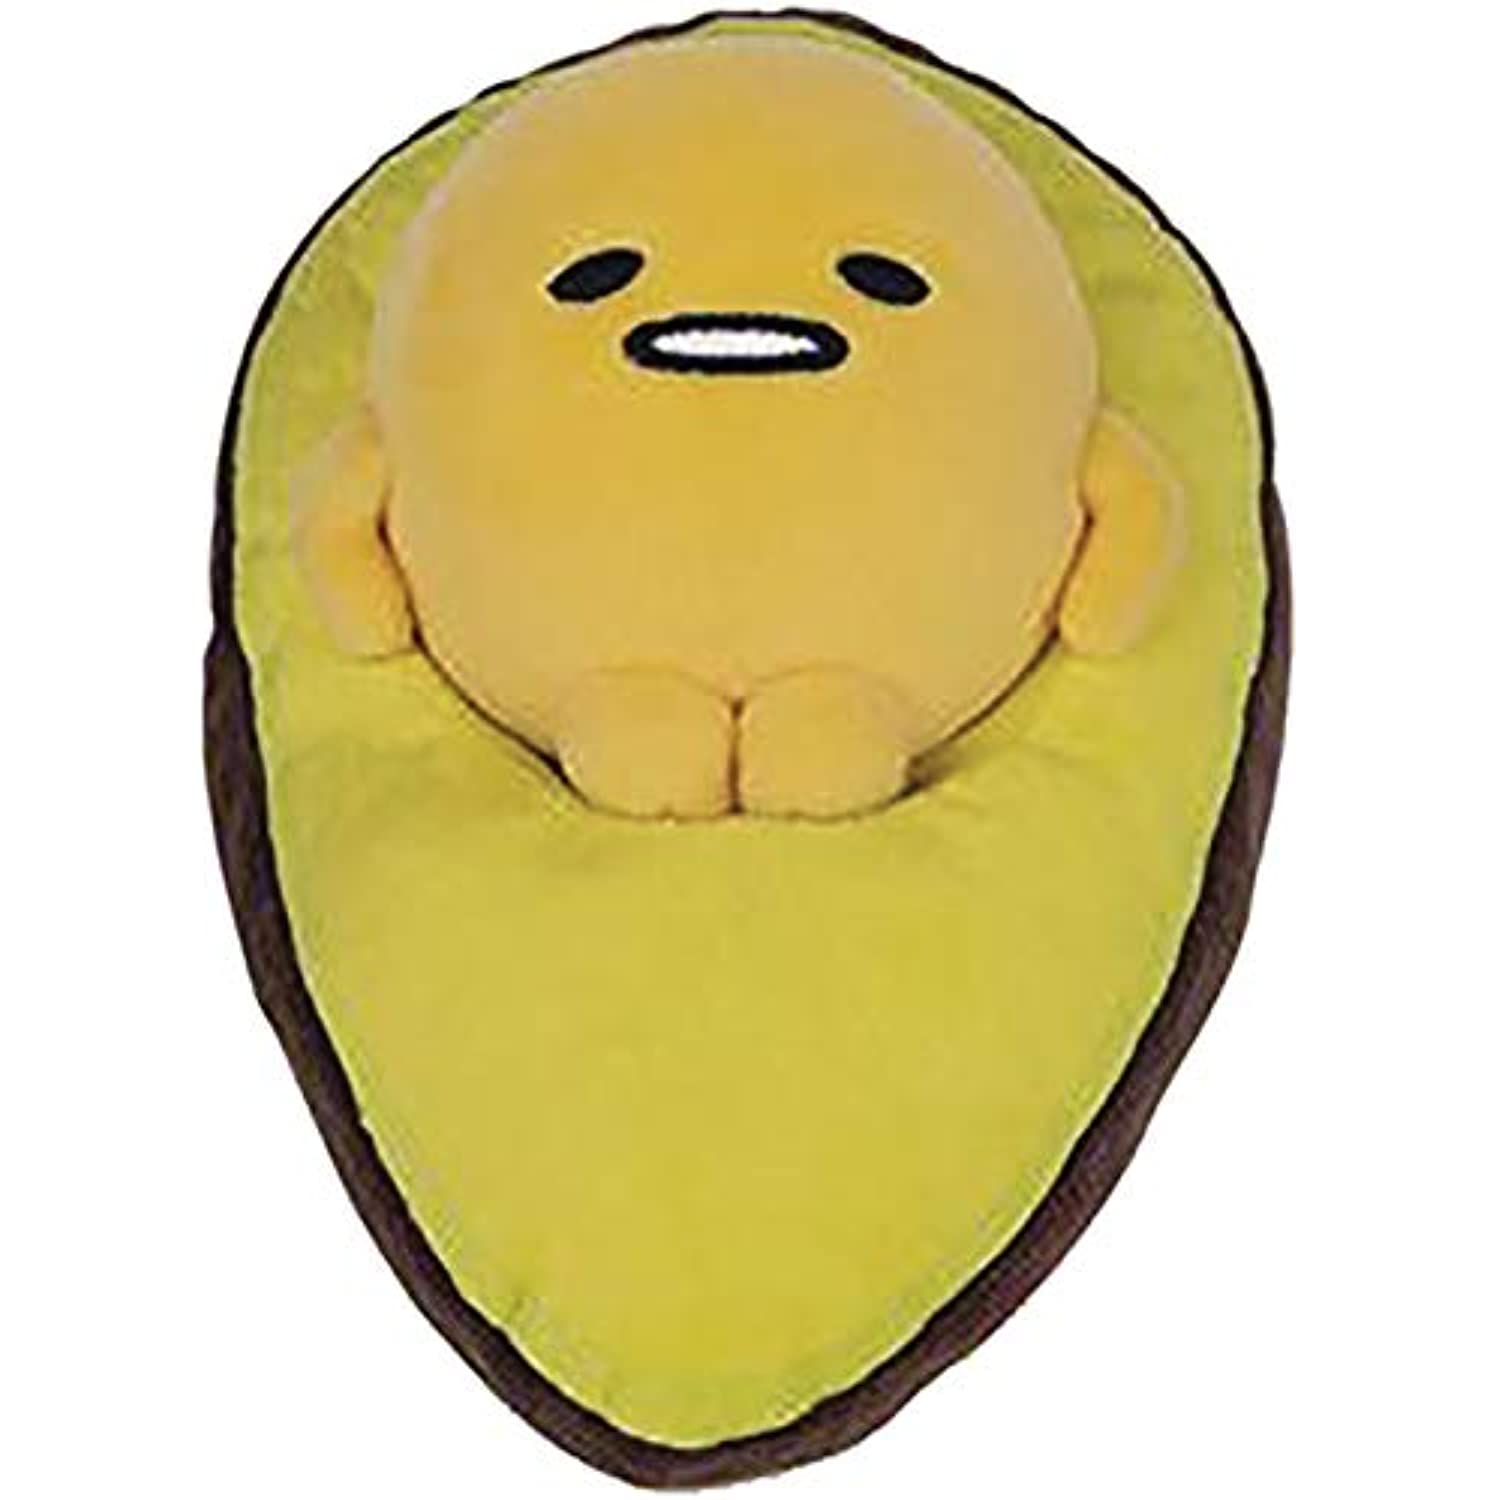 GUND Sanrio Gudetama The Lazy Egg Avocado Plush Stuffed Animal, 9"